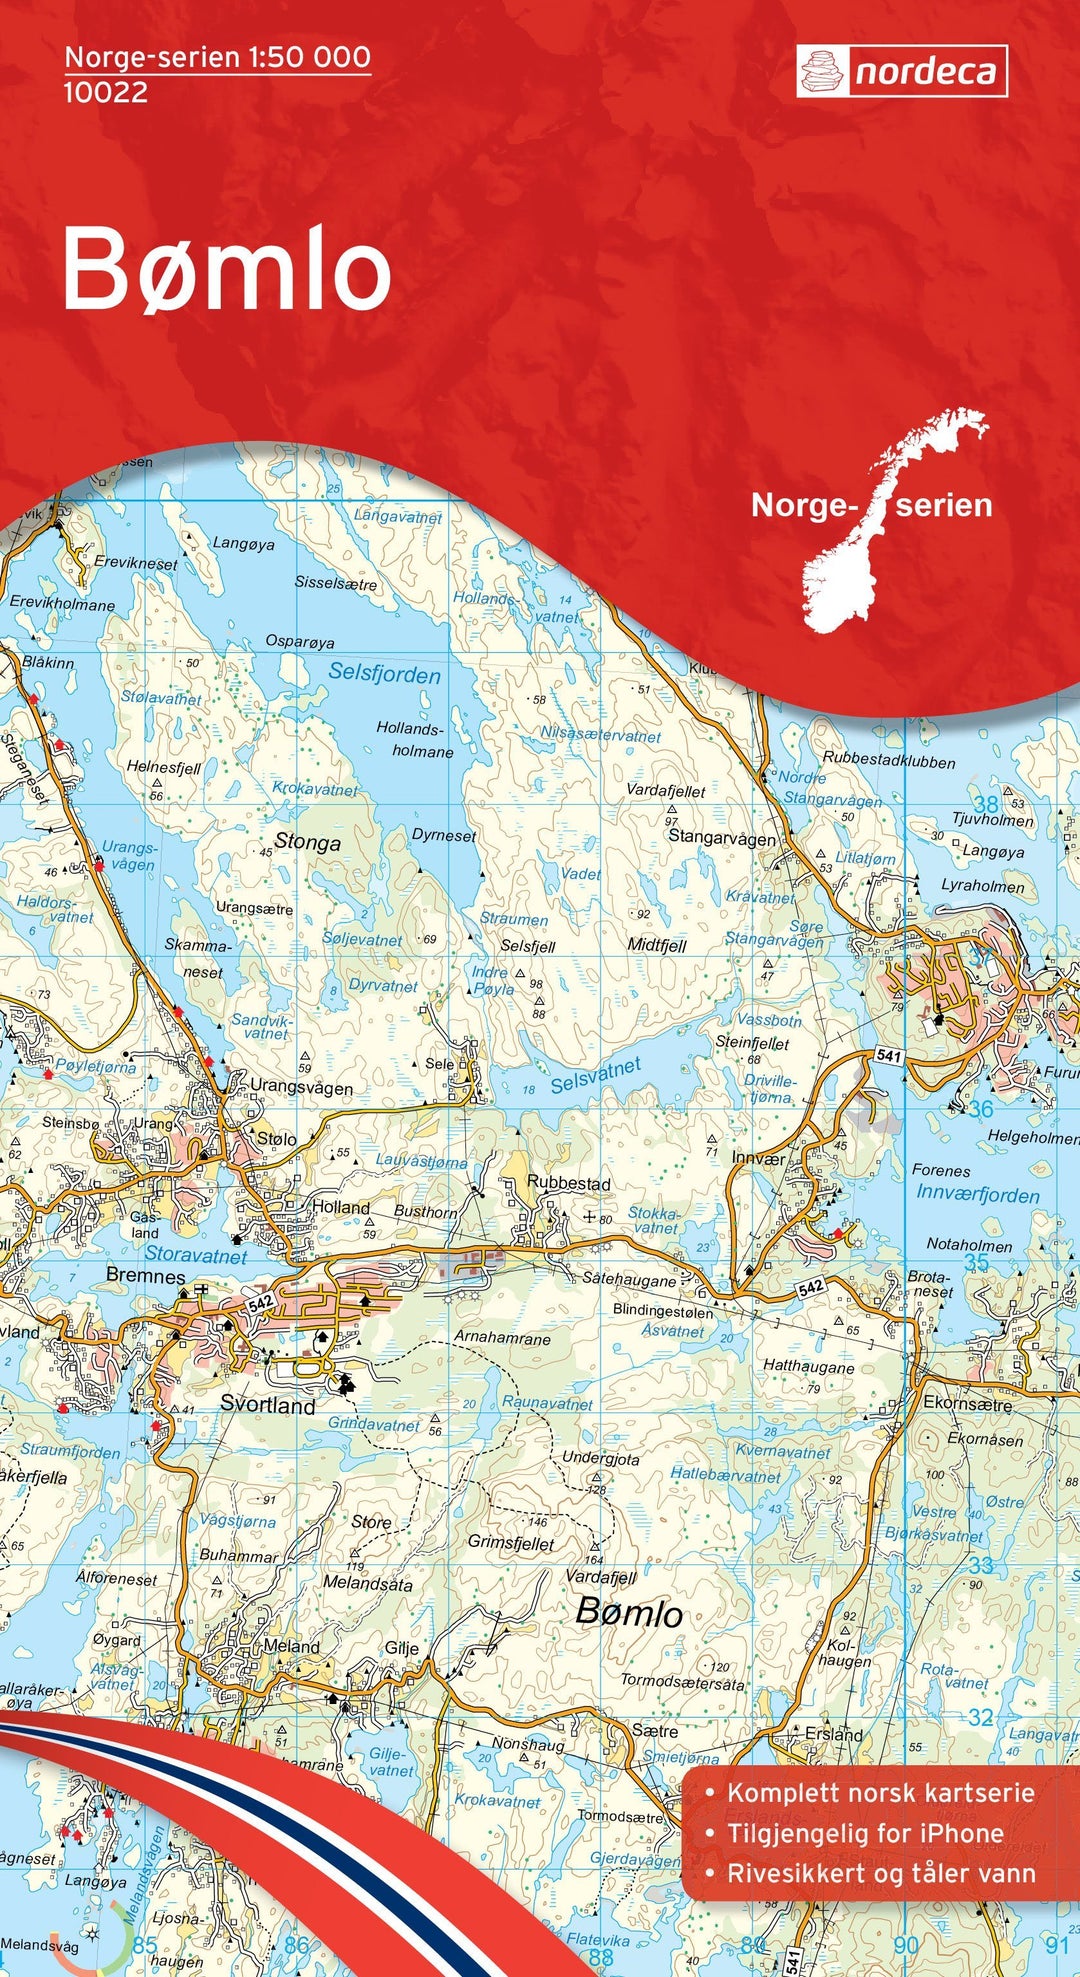 Carte de randonnée n° 10022 - Bomlo (Norvège) | Nordeca - Norge-serien carte pliée Nordeca 